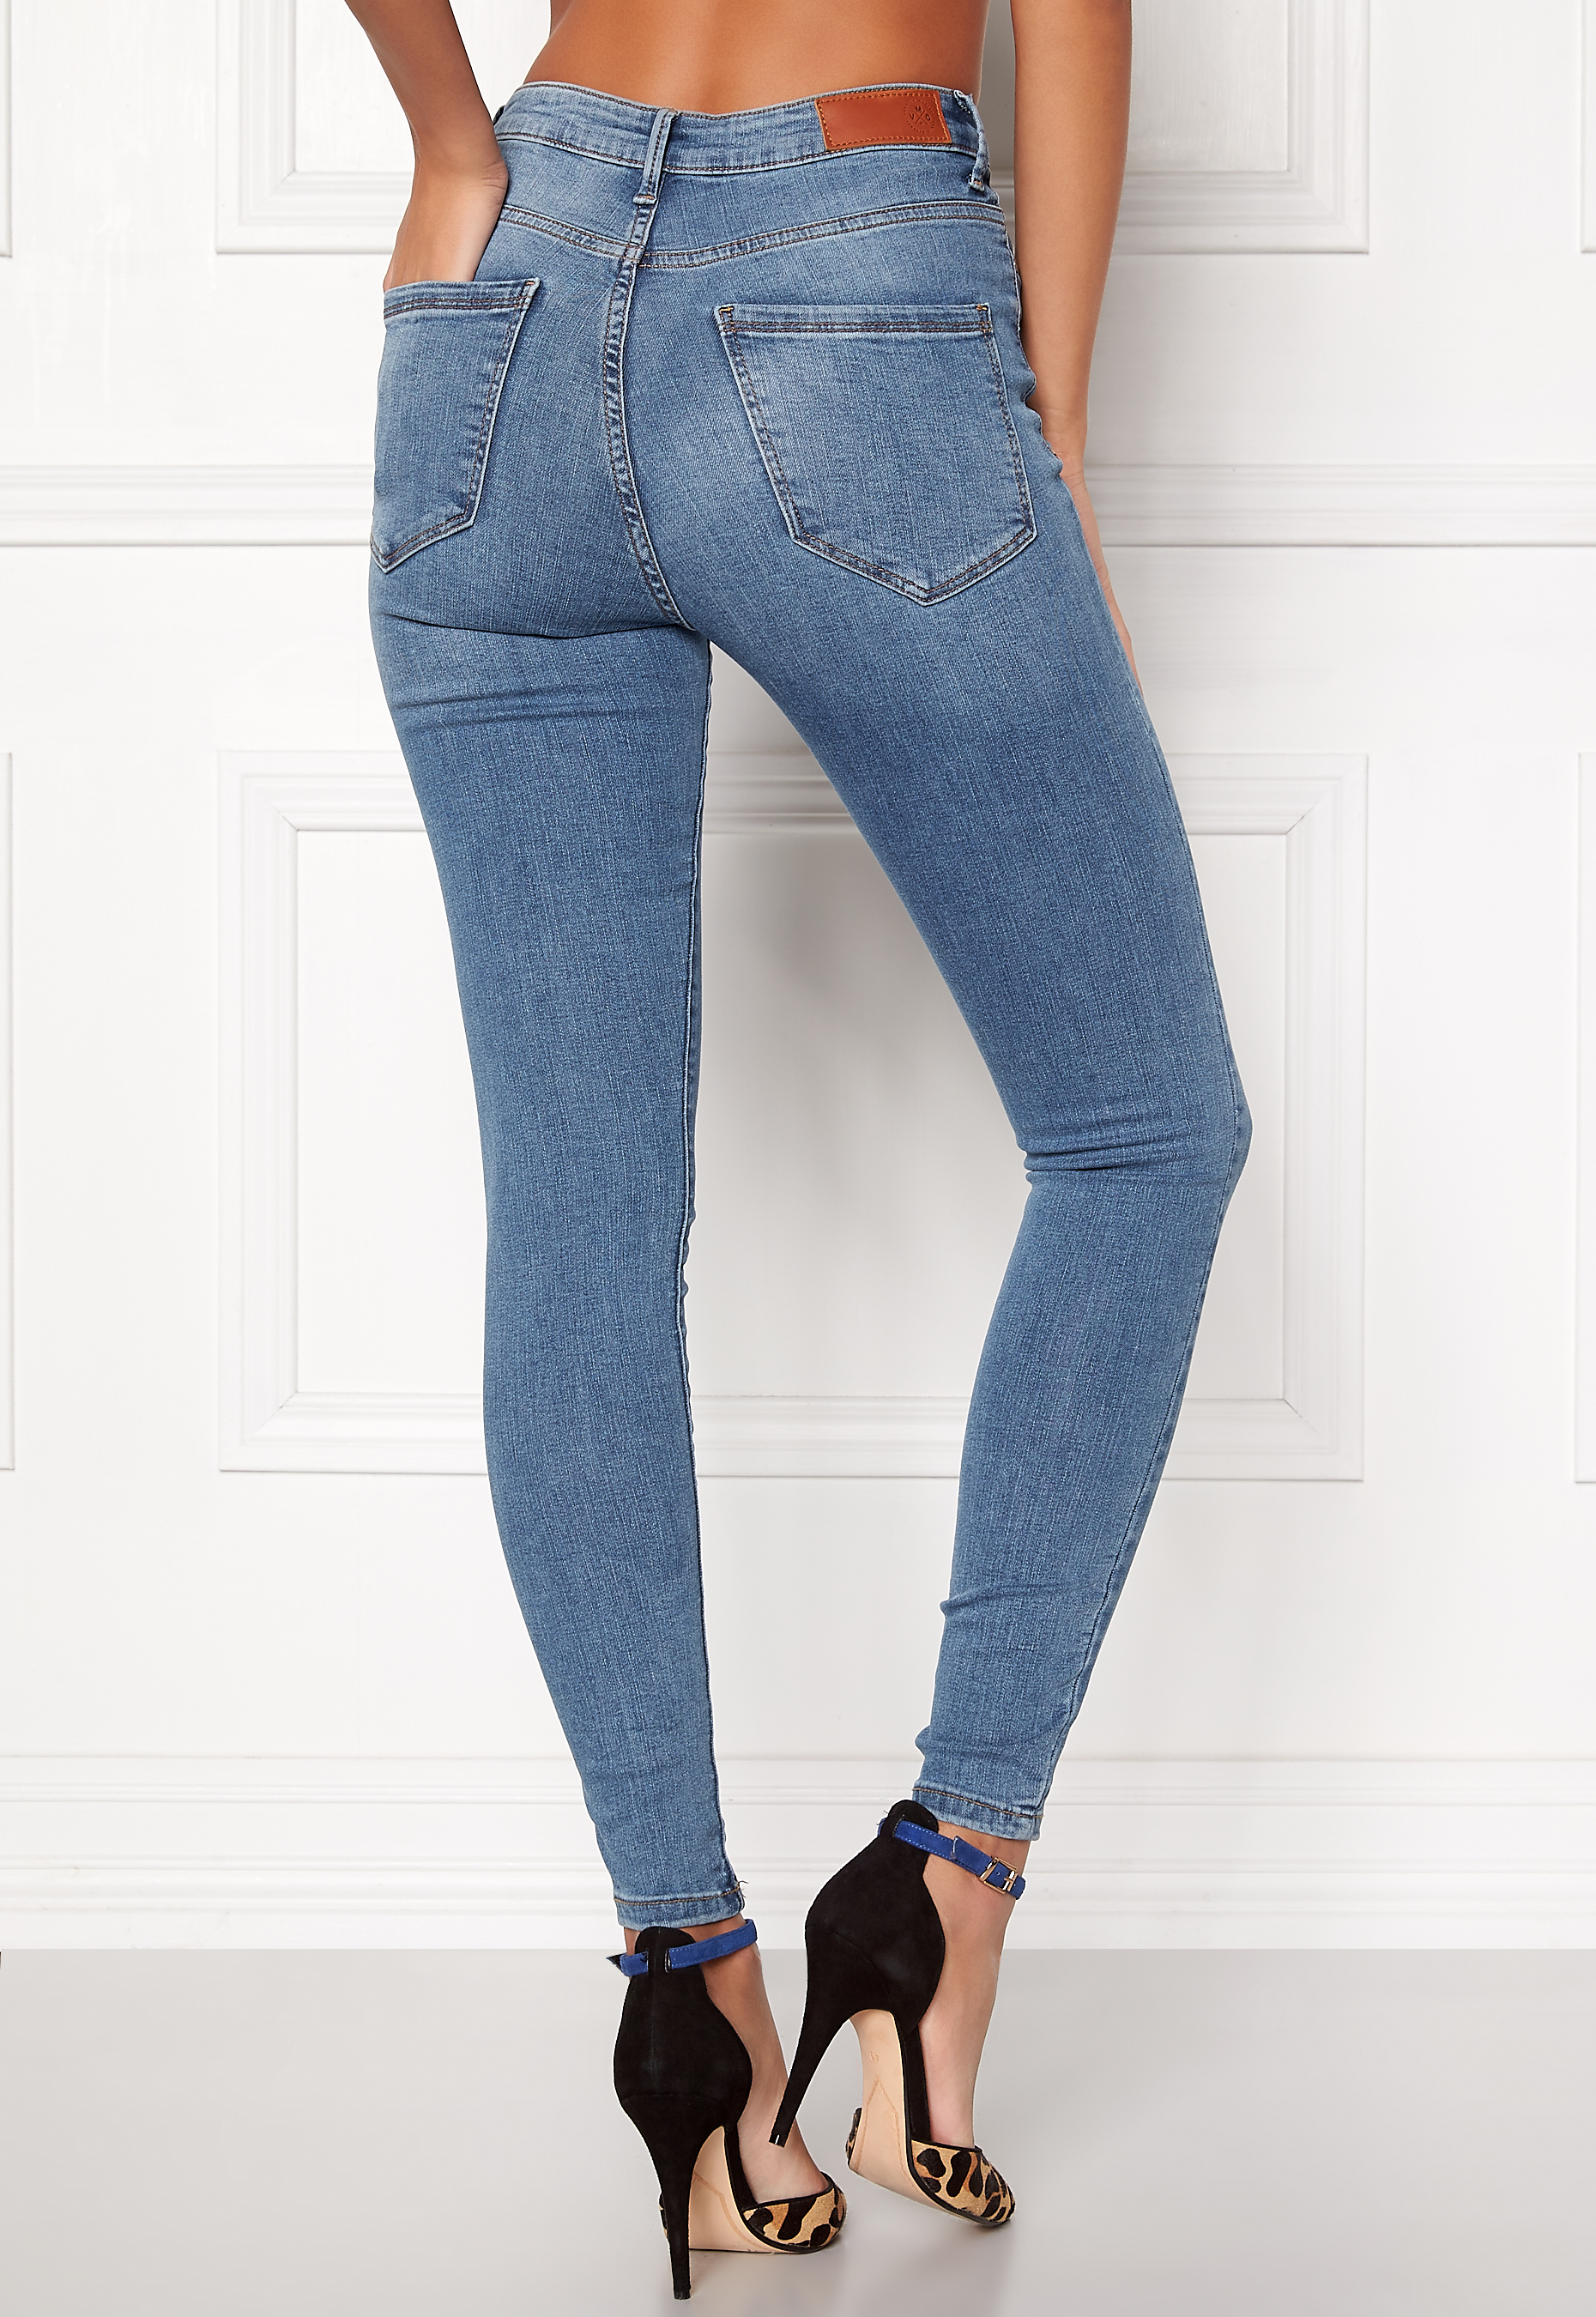 vero moda sophia jeans